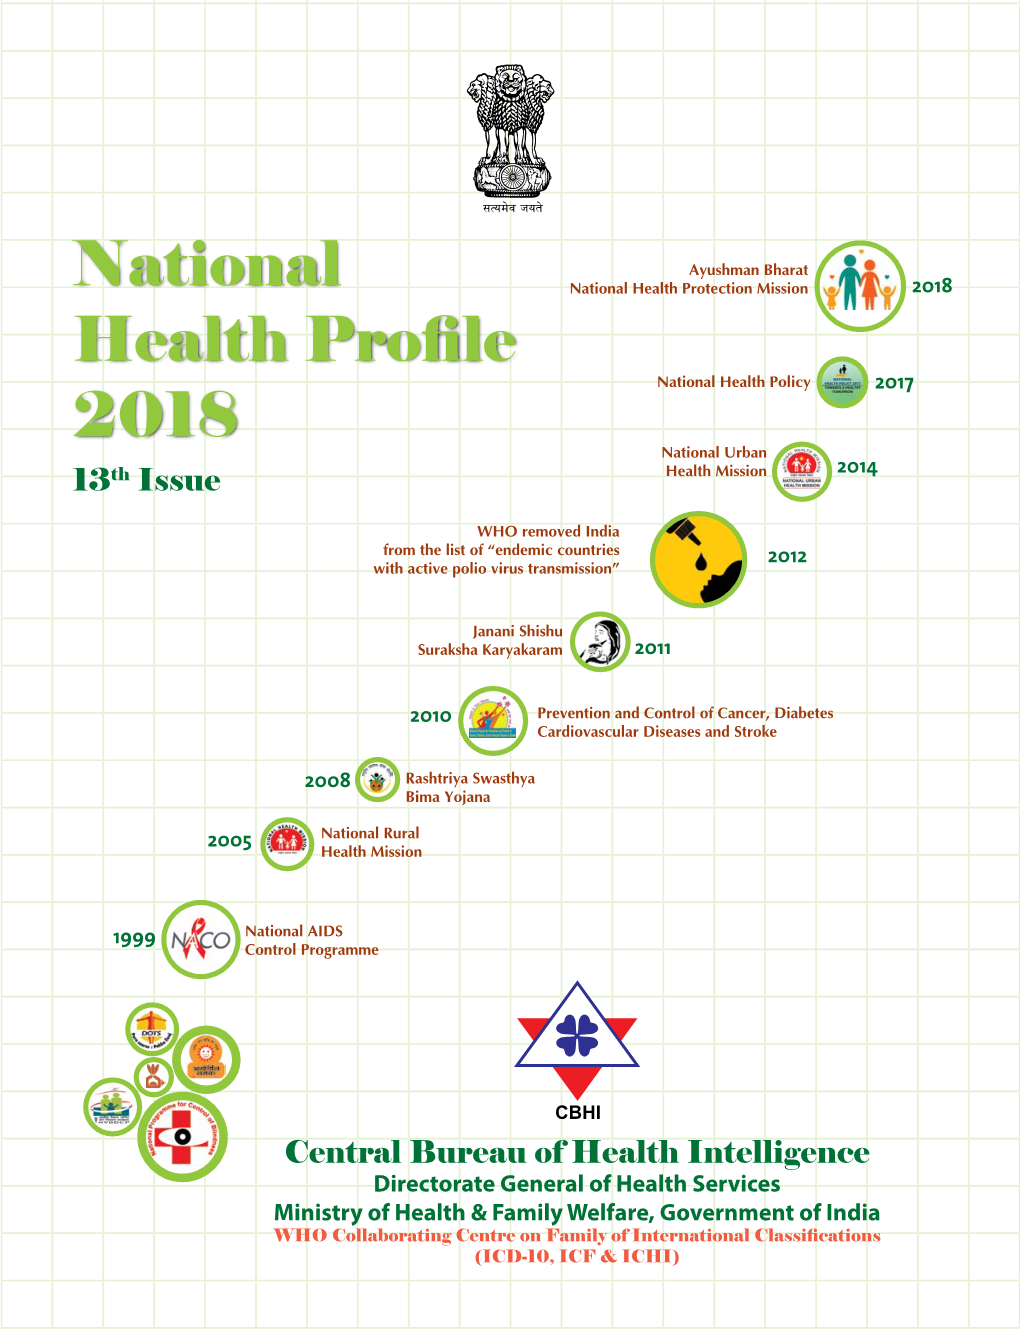 National Health Profile 2018